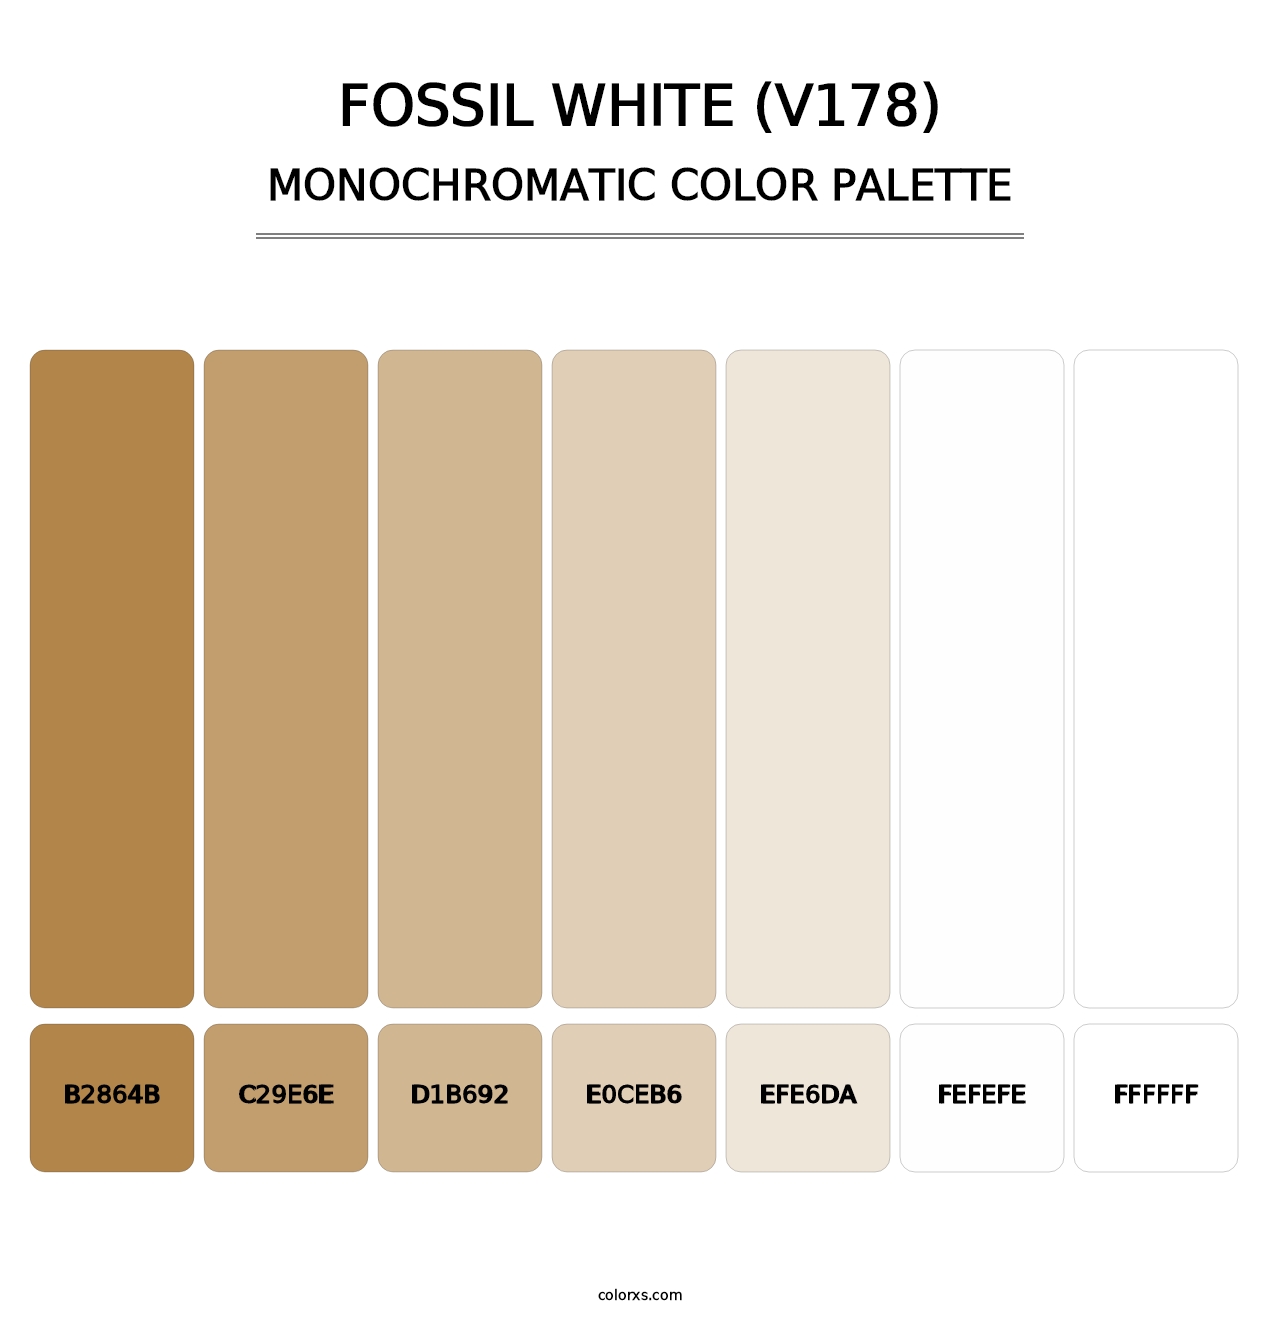 Fossil White (V178) - Monochromatic Color Palette